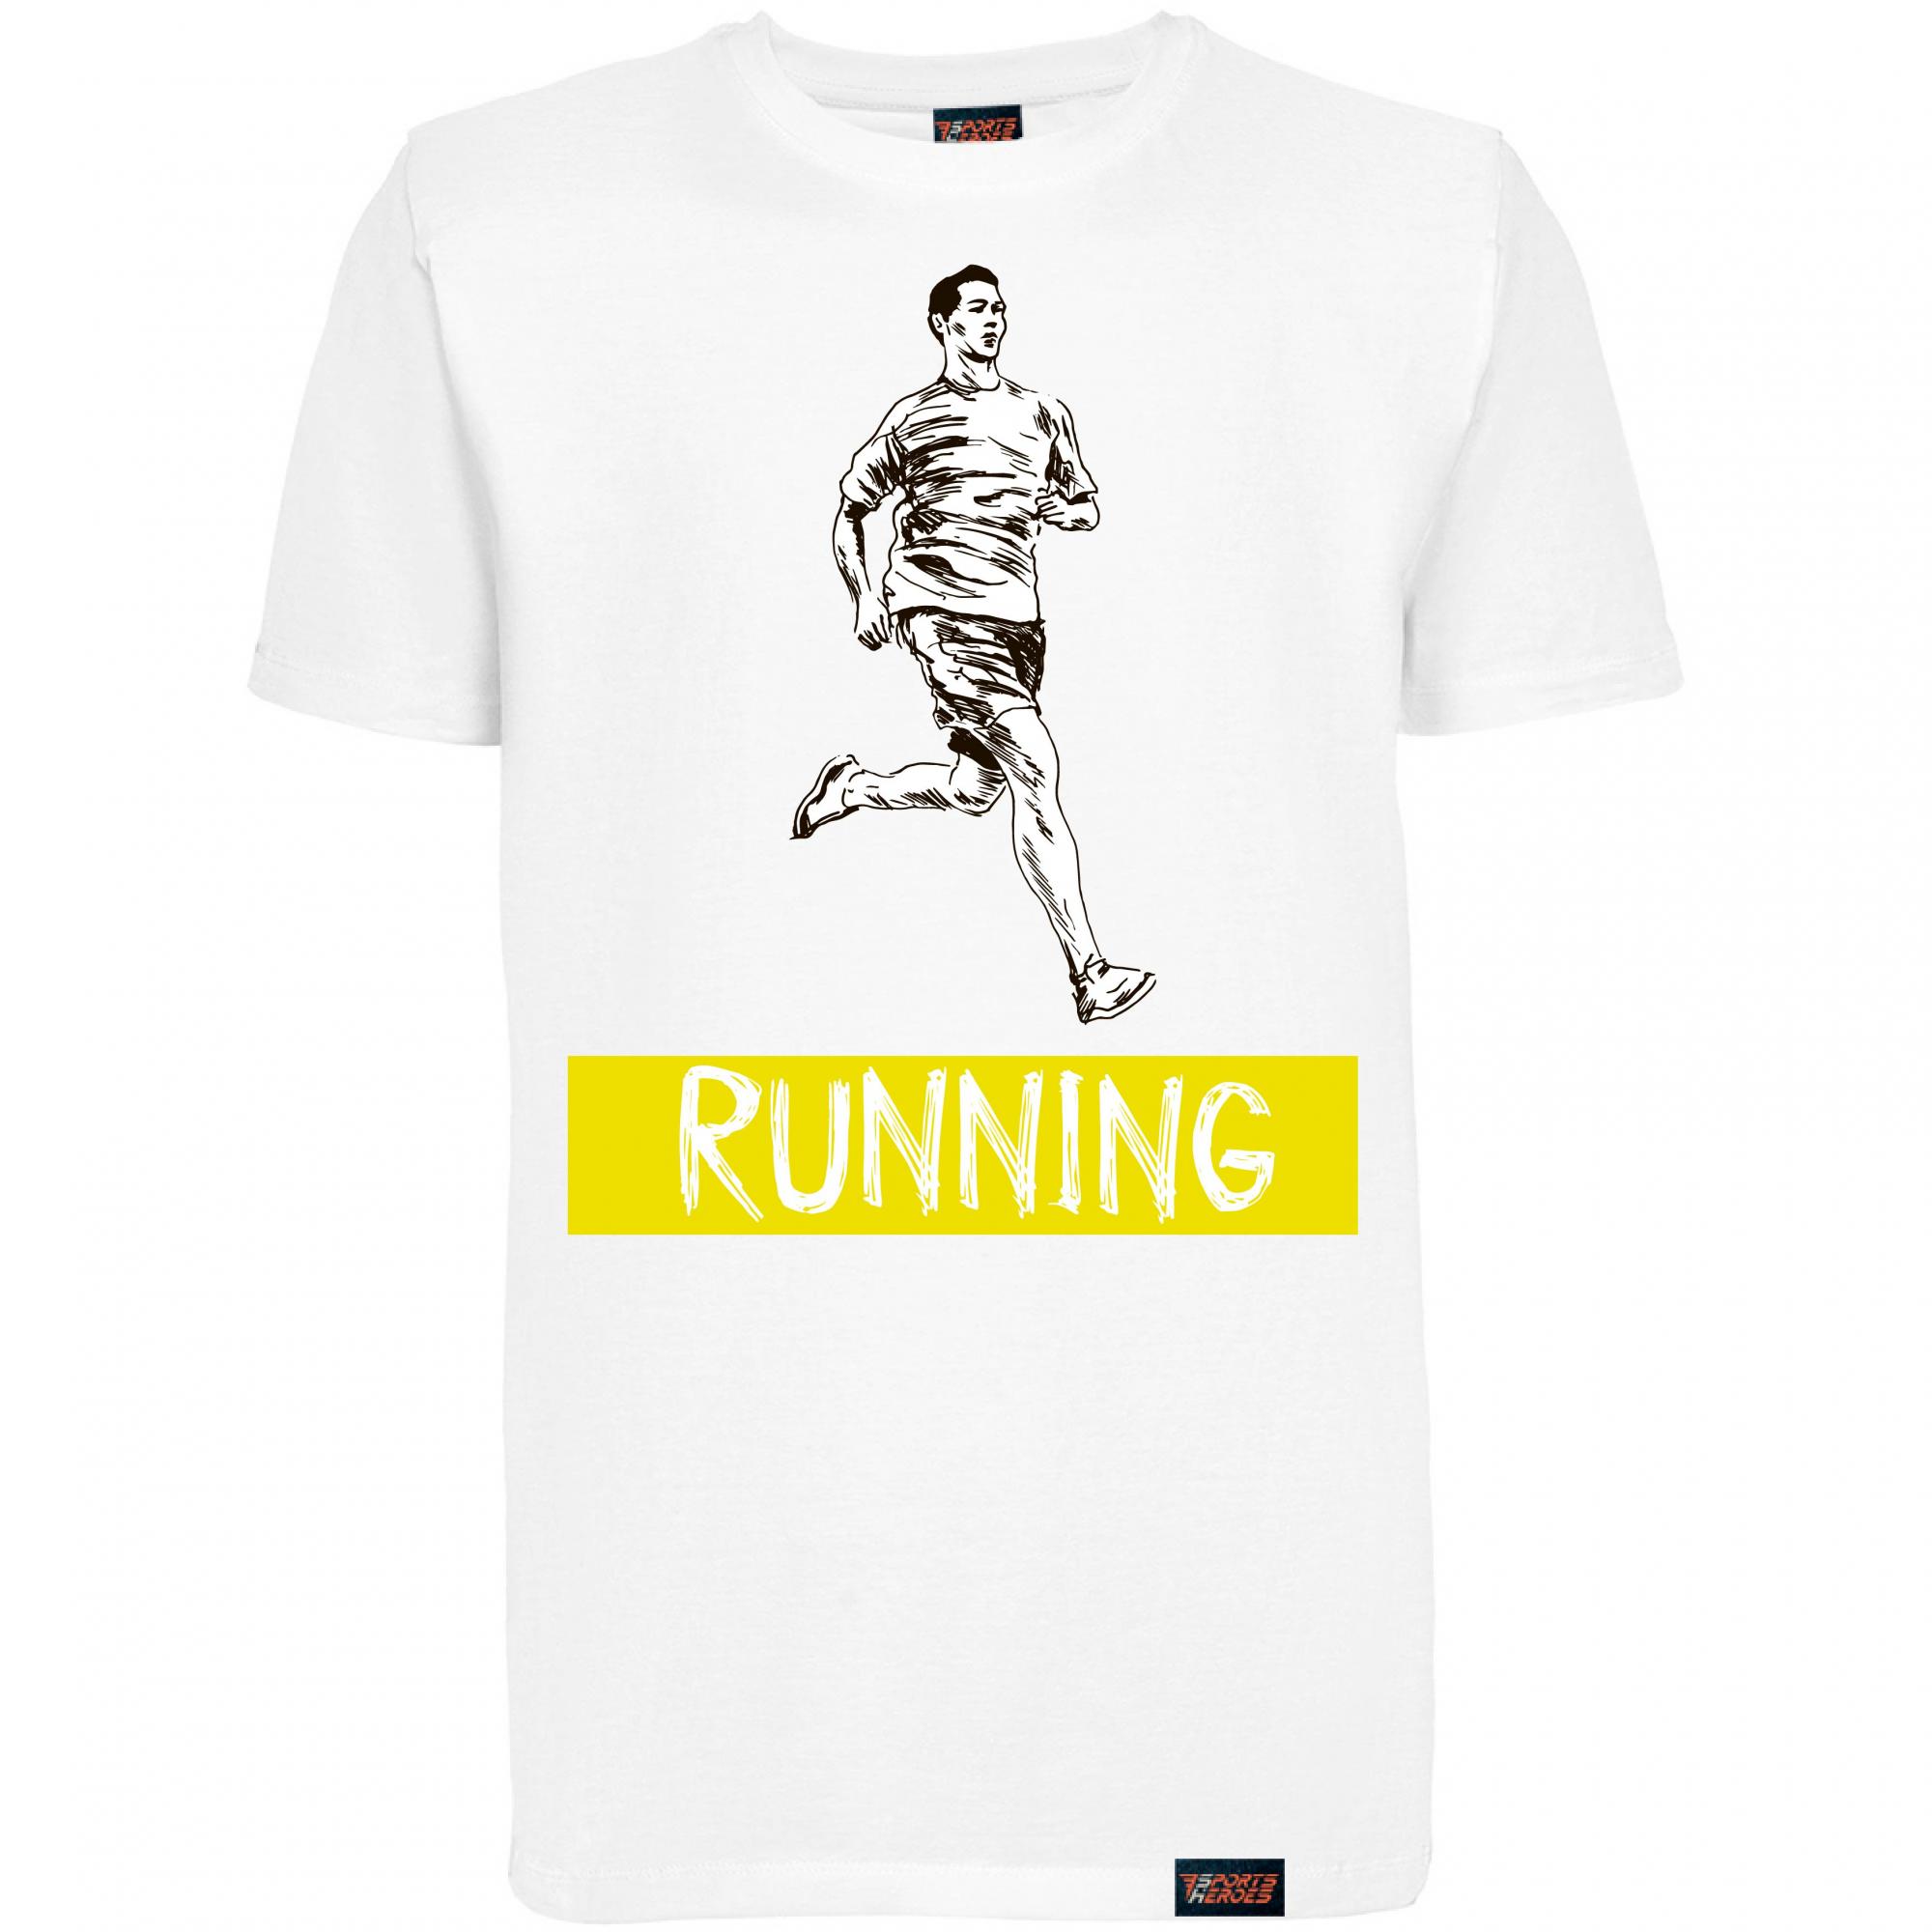 Футболка забег. Running футболка. Белая футболка Running. Футболка забег 2020. Дизайн футболок бег.